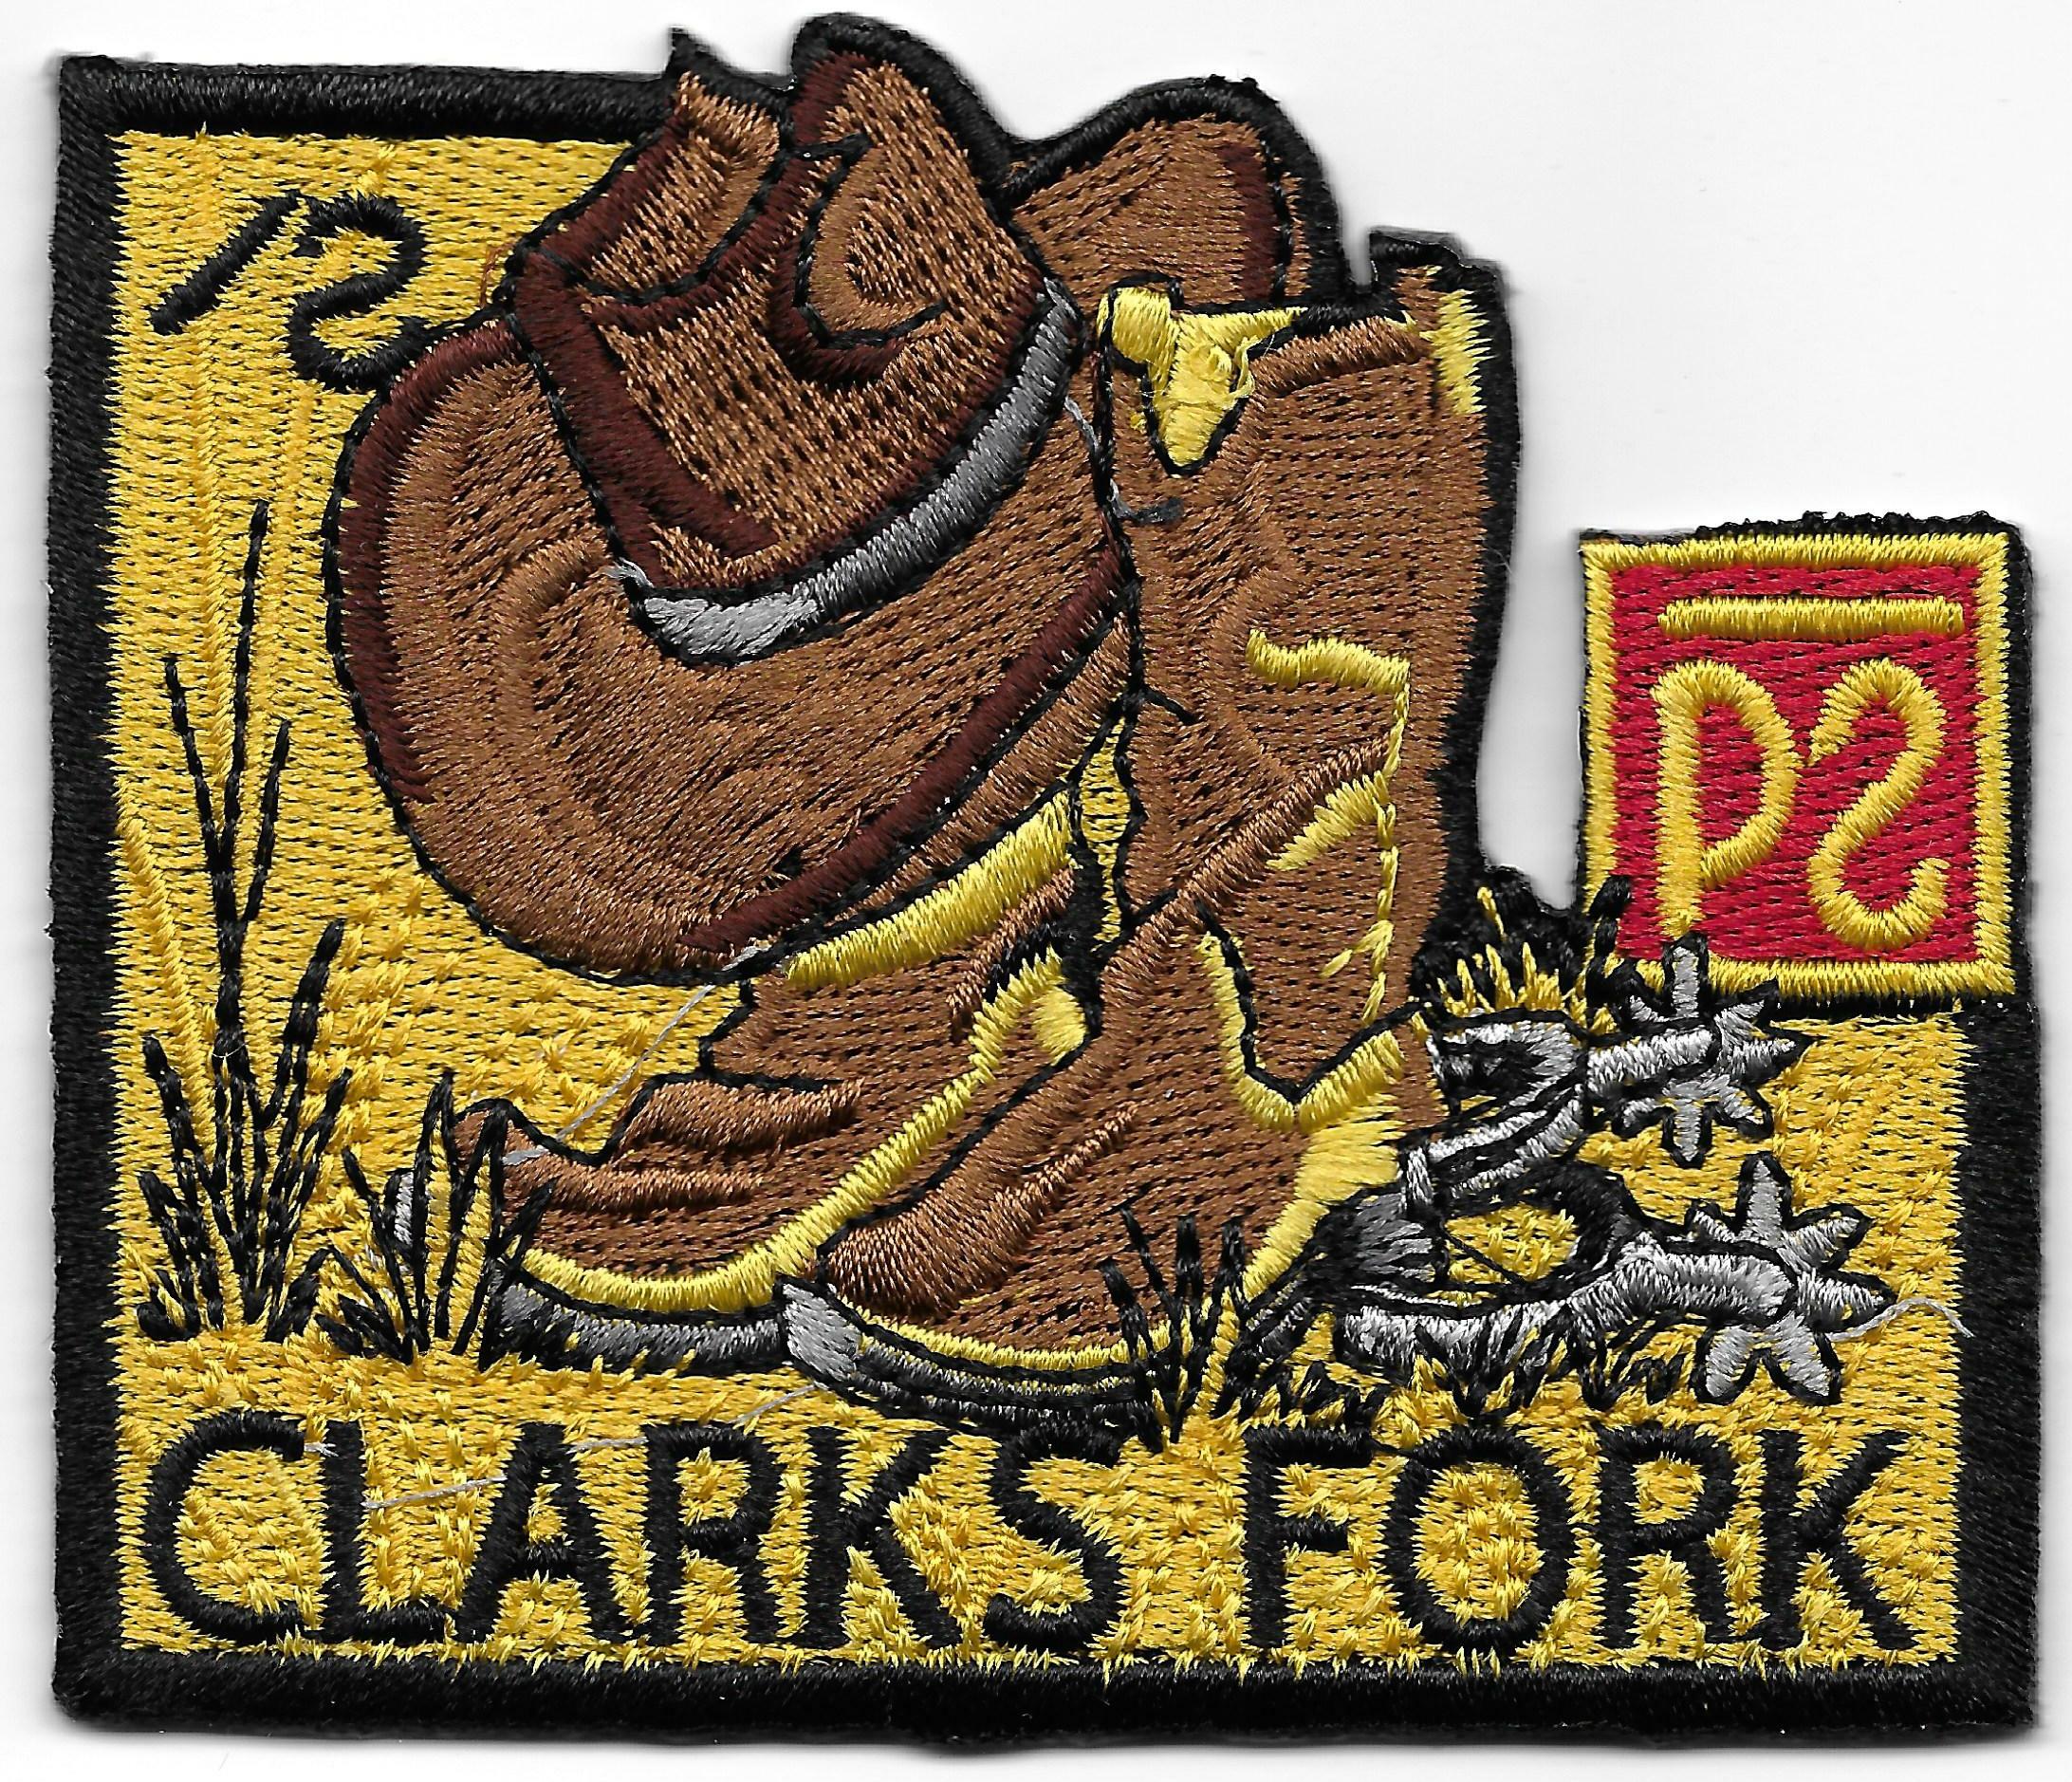 Clarks Fork patch image